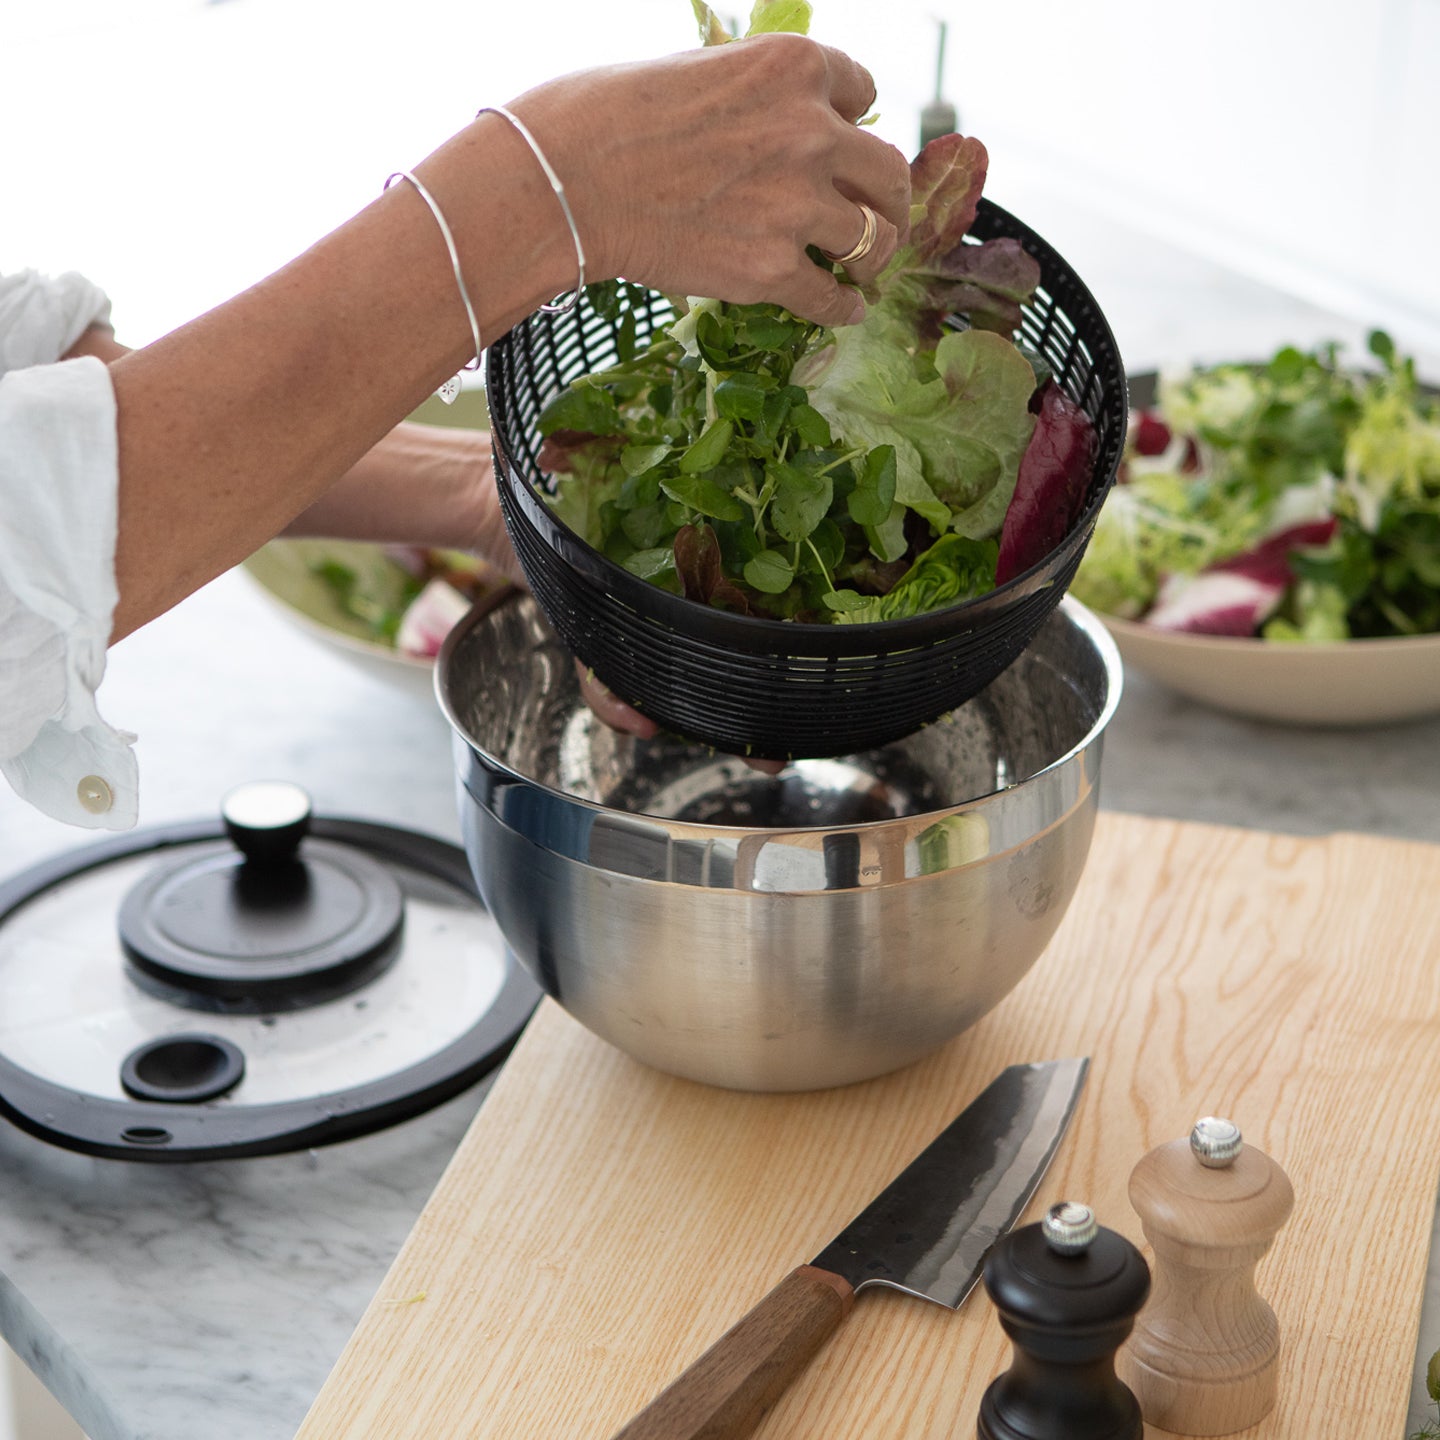 OXO Good Grips Stainless Steel Salad Spinner